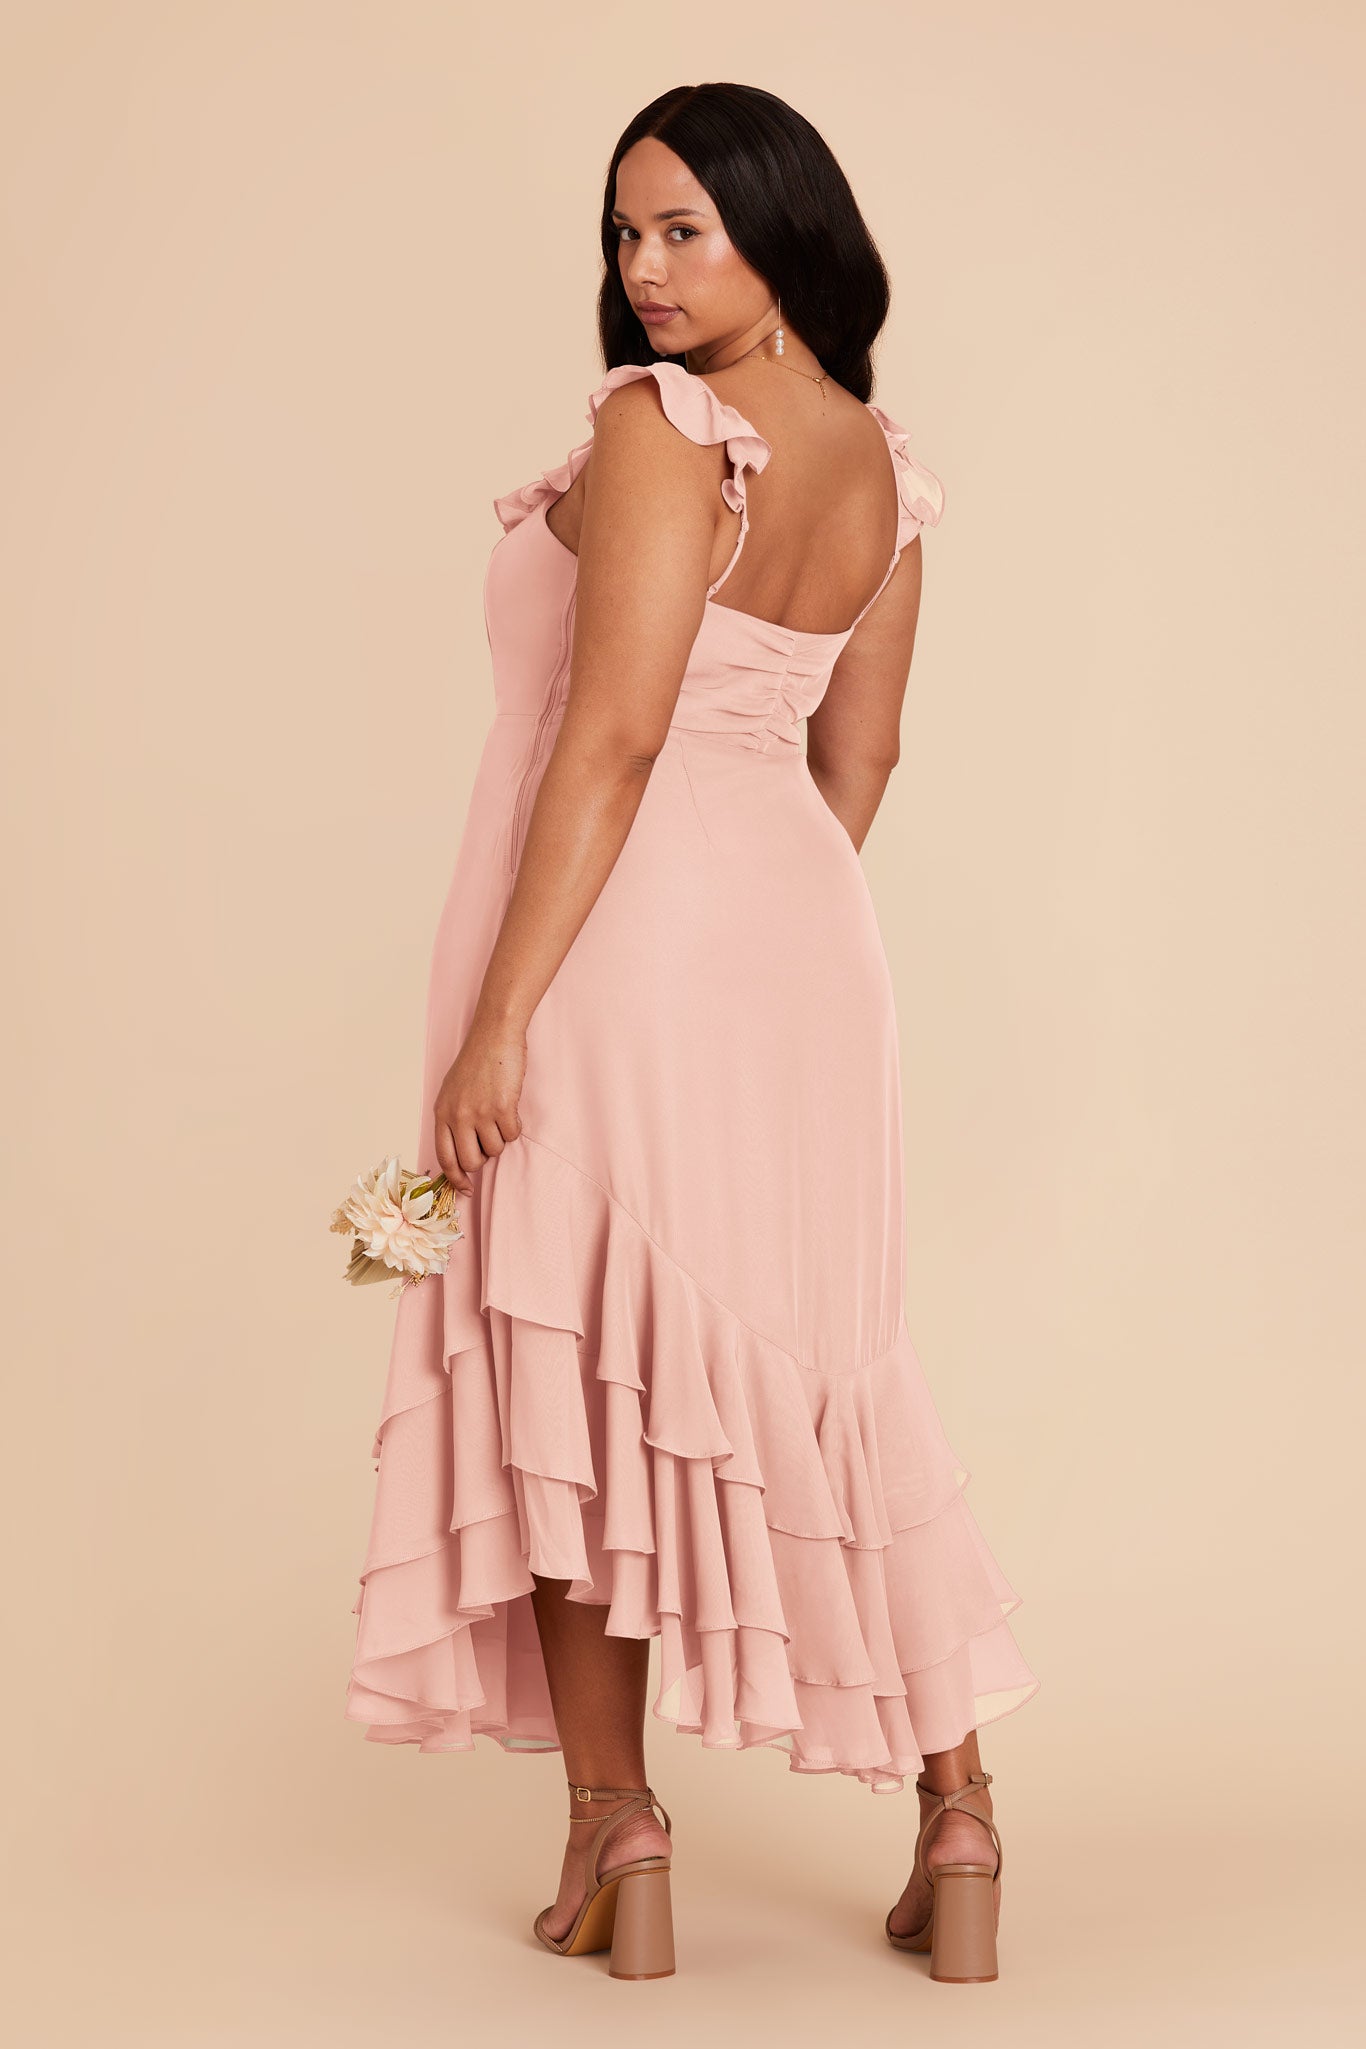 Blush Pink Ginny Chiffon Dress by Birdy Grey